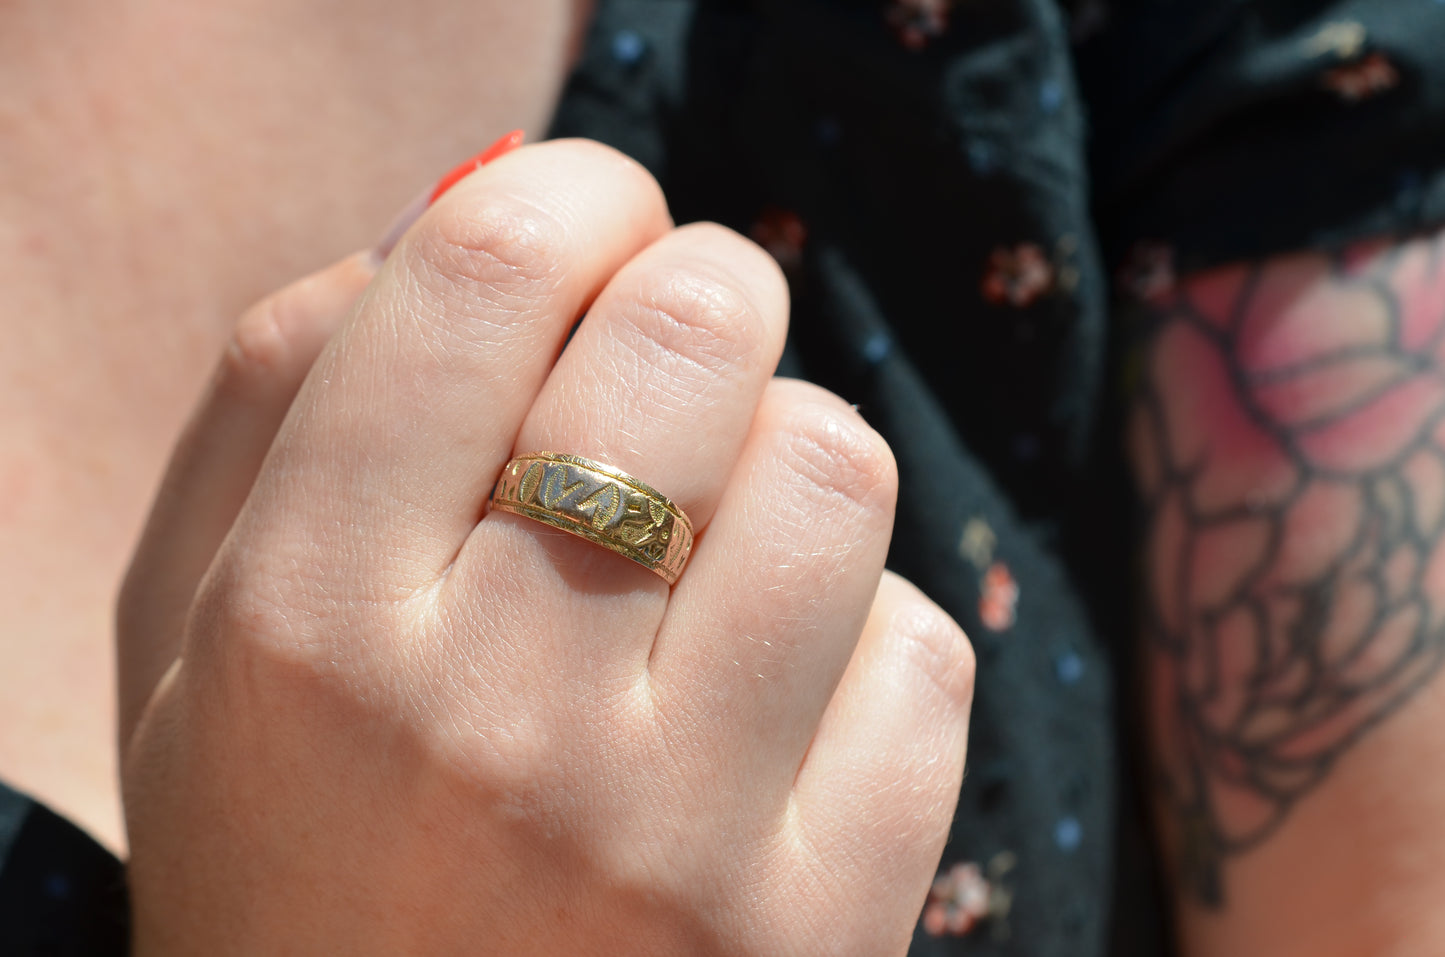 Worn Antique Mizpah Ring